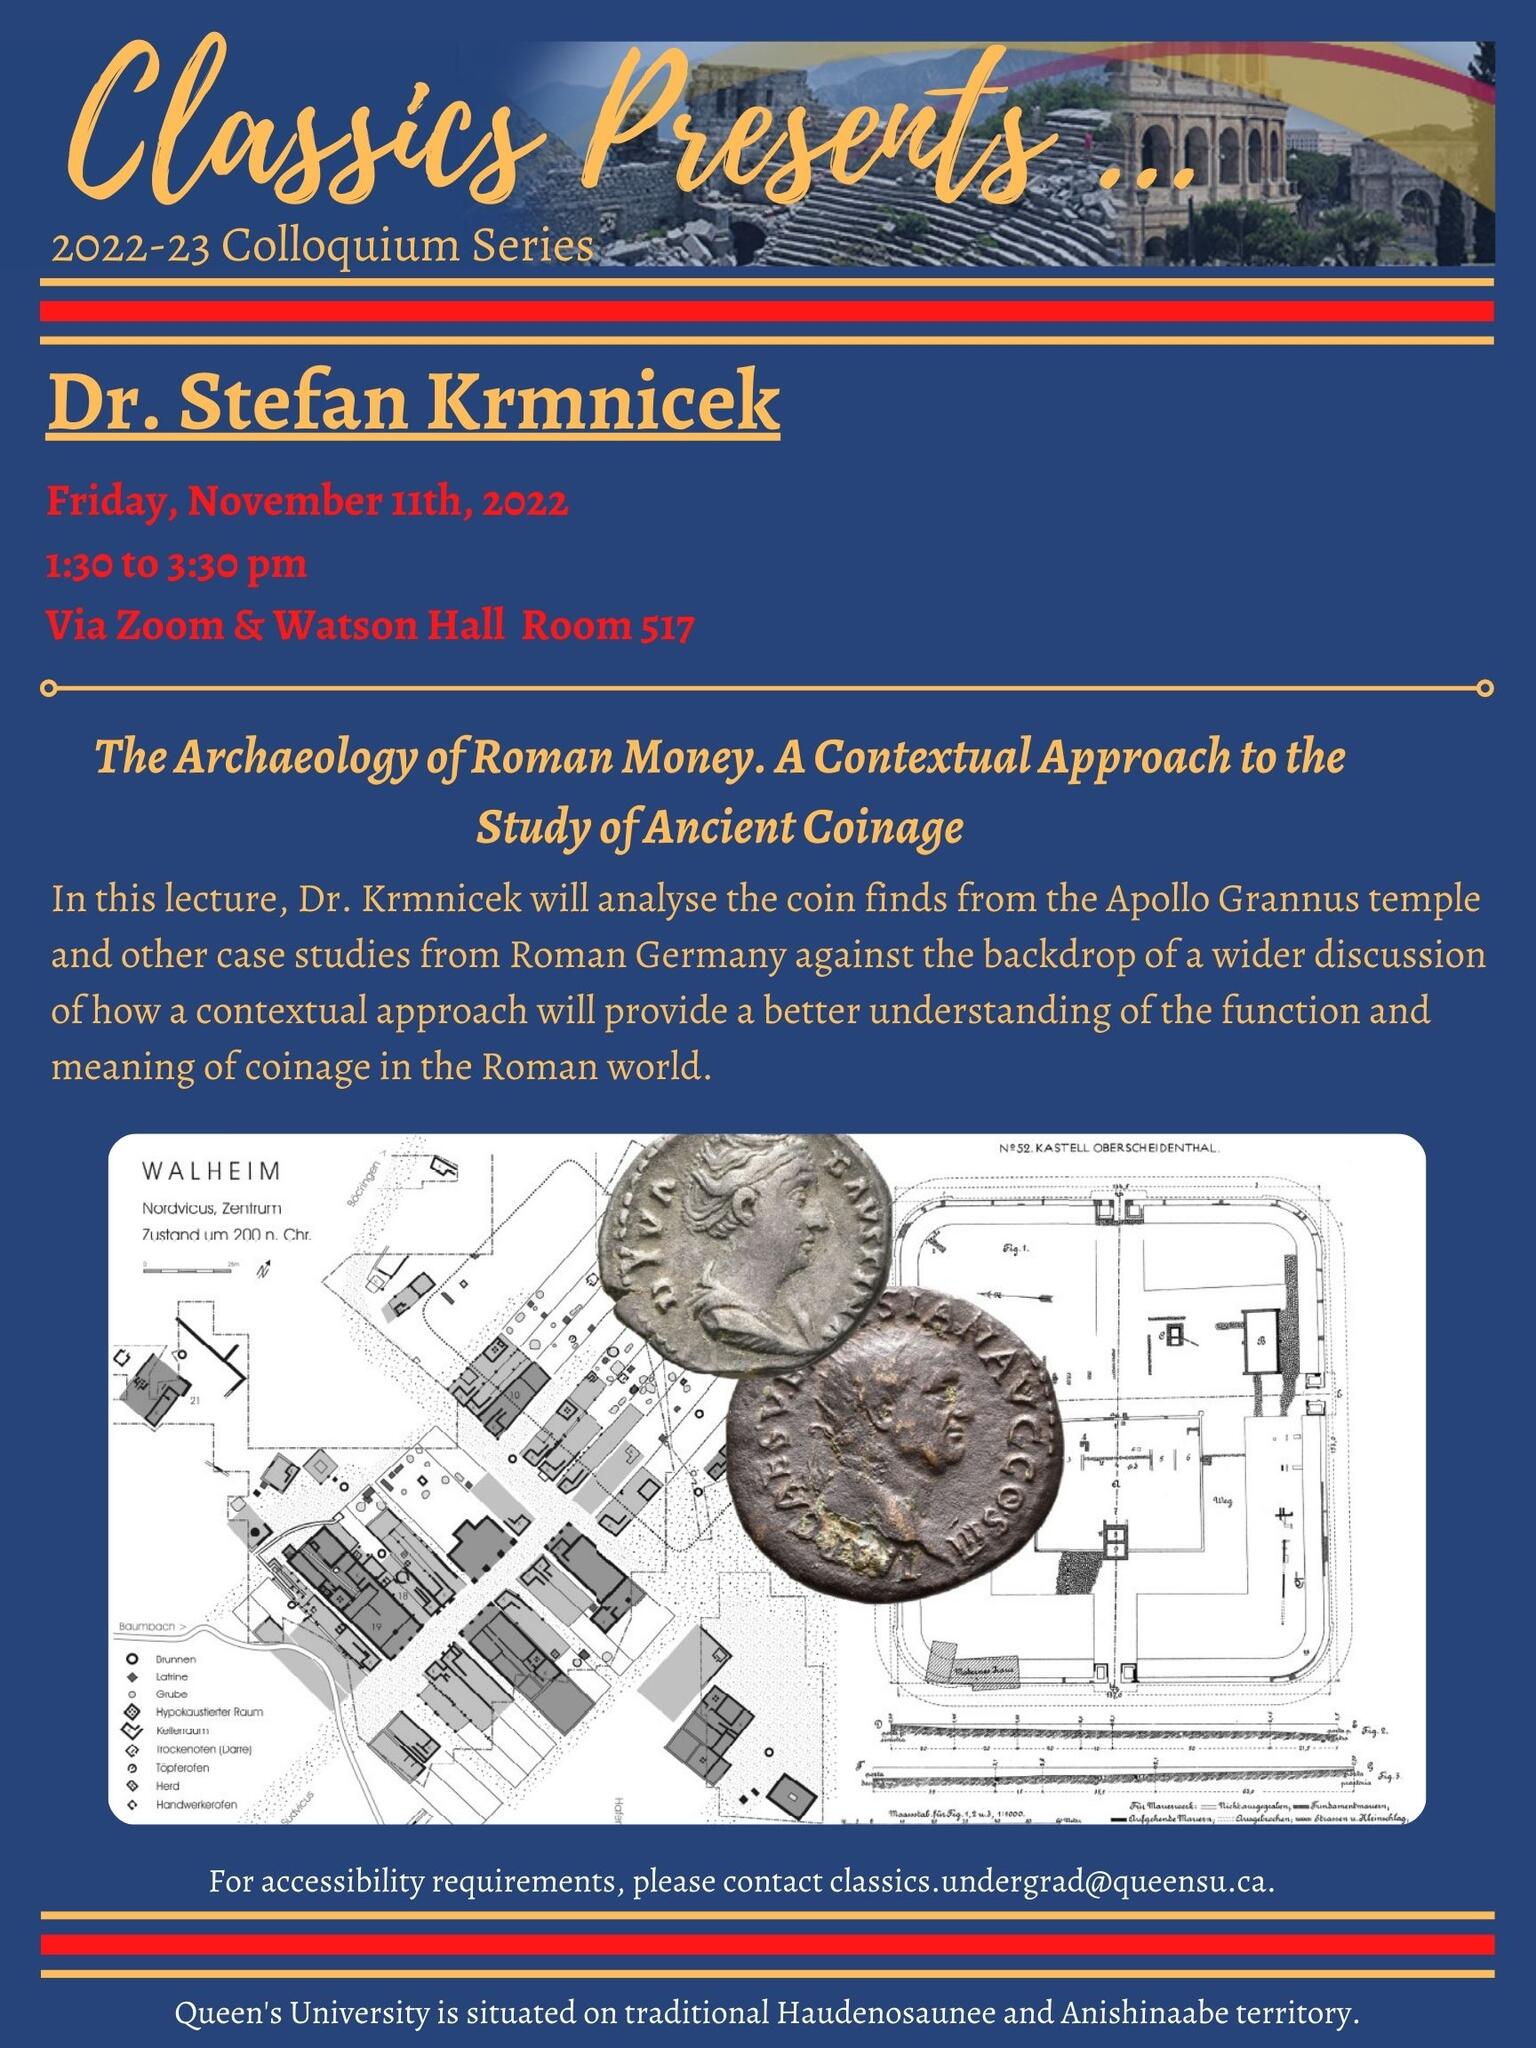 Classics Presents Dr. Stefan Krmnicek